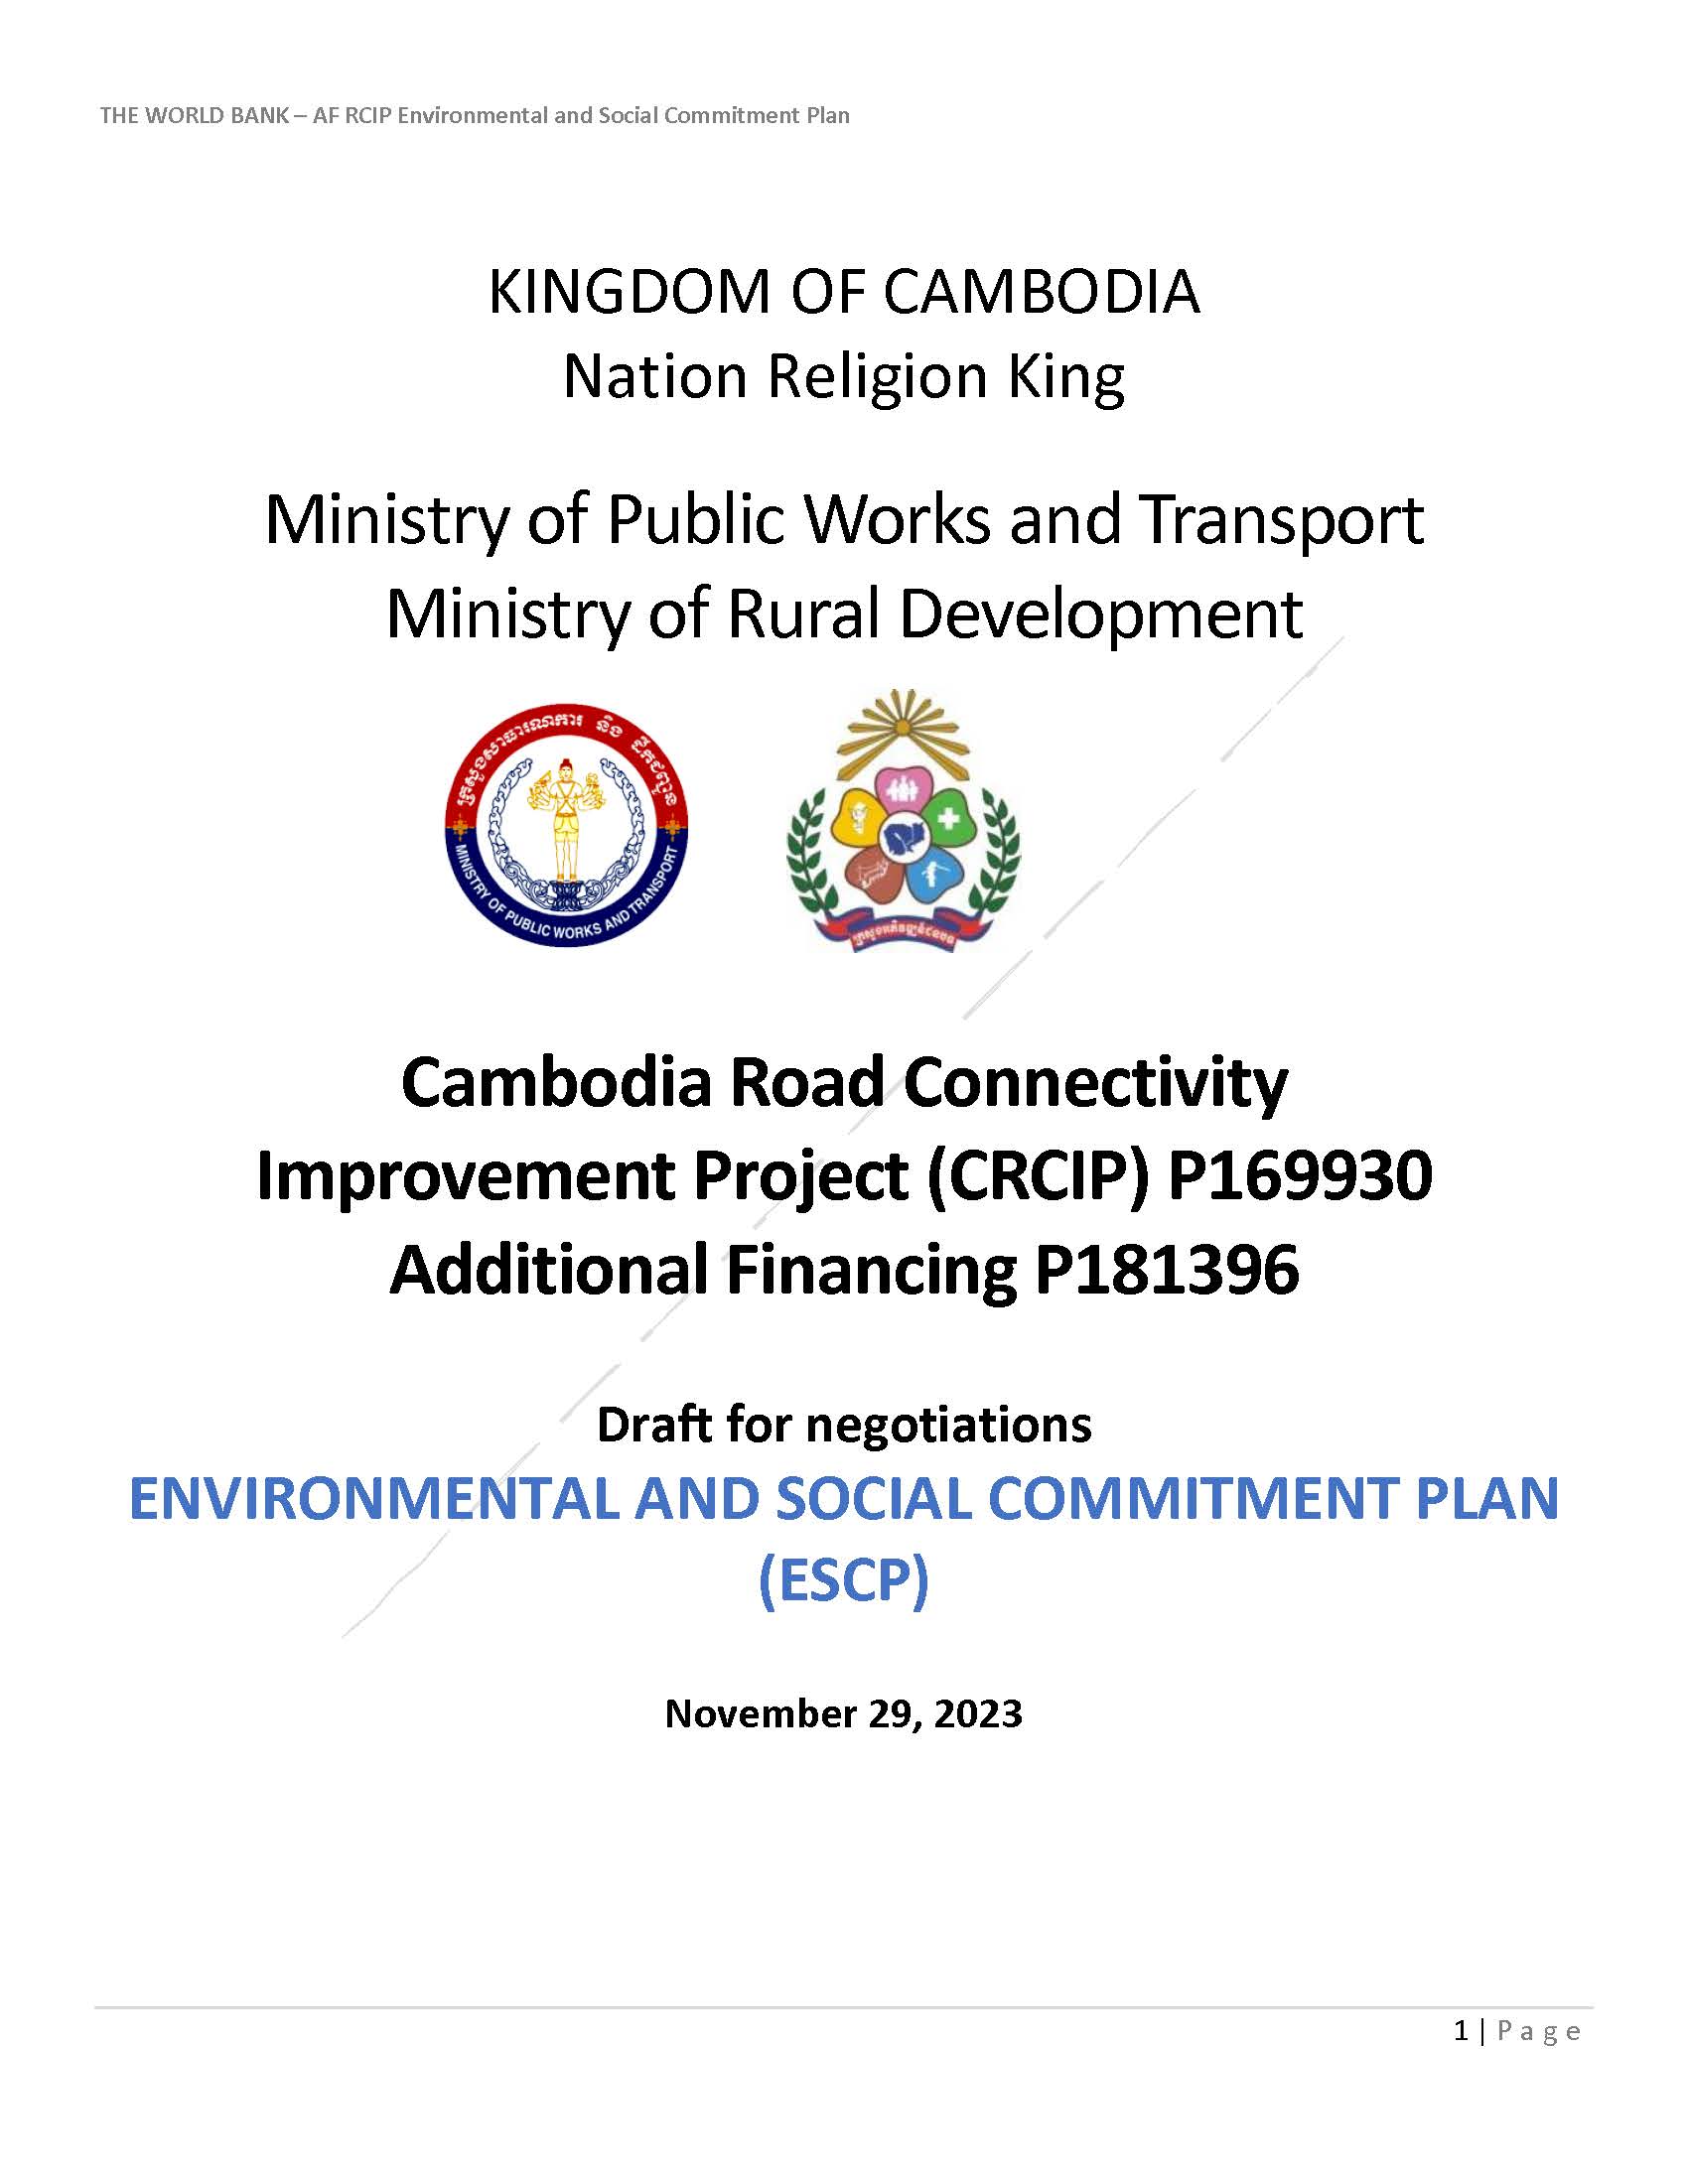 Environmental and social commitment plan